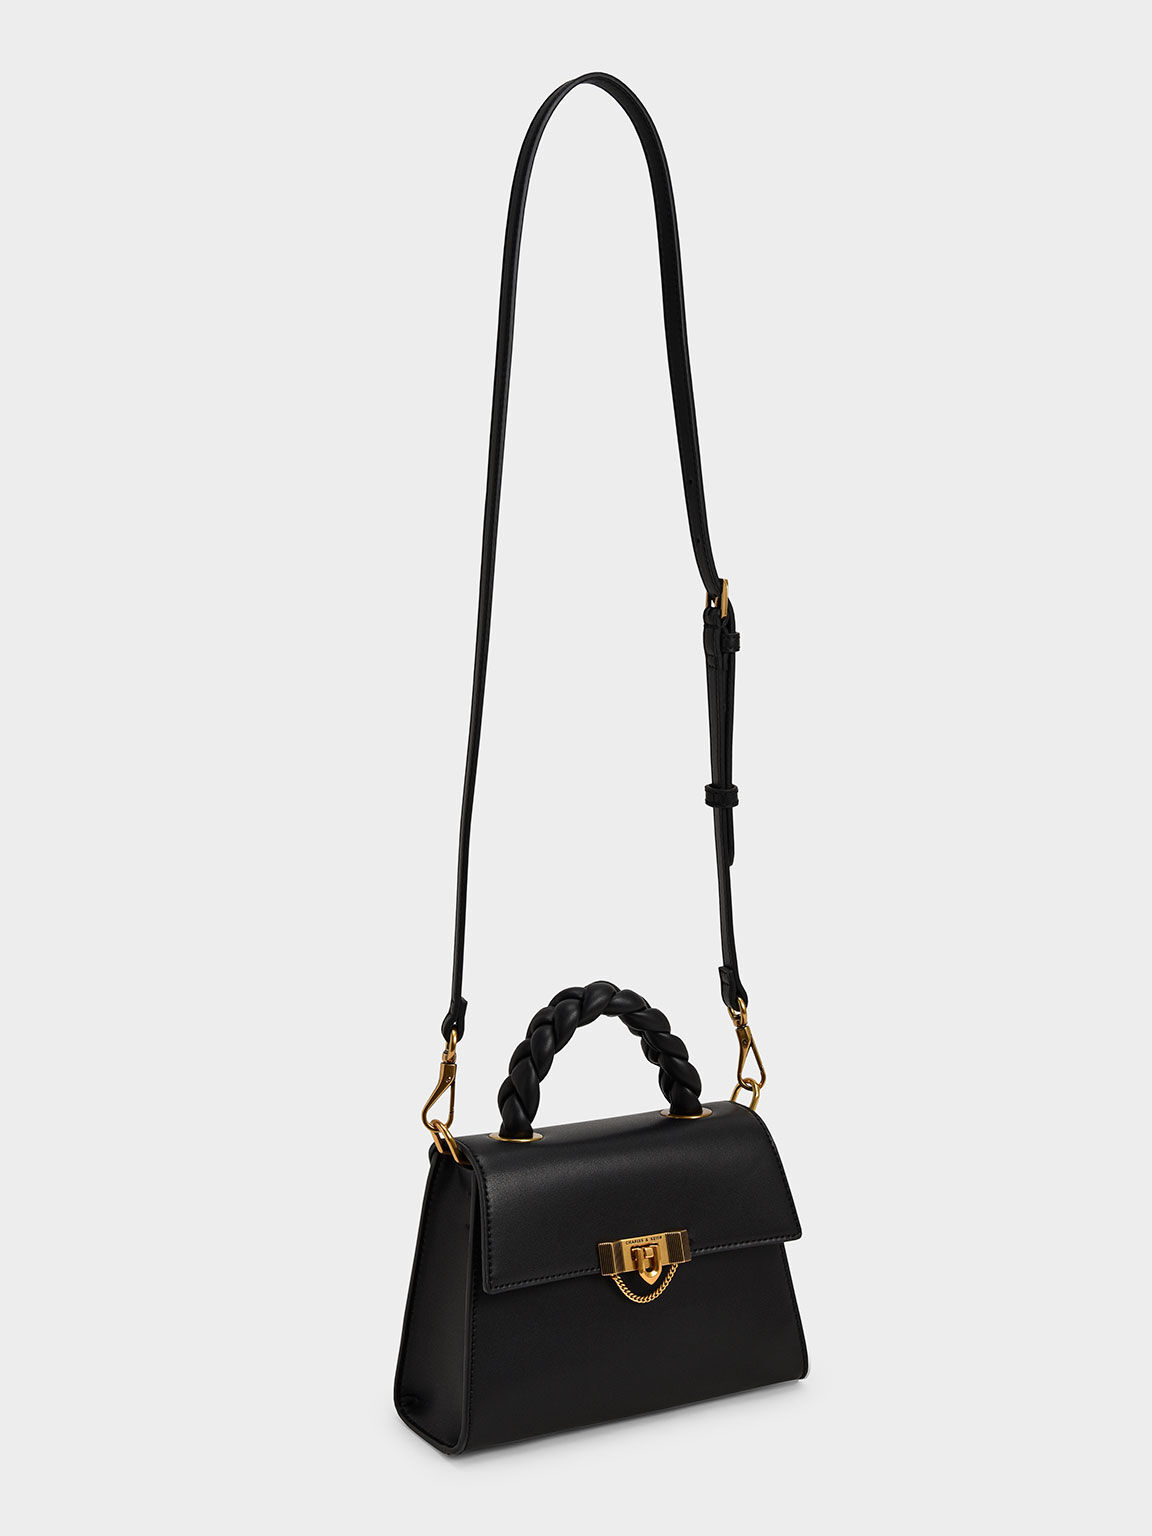 Tallulah Braided Handle Trapeze Bag, Black, hi-res